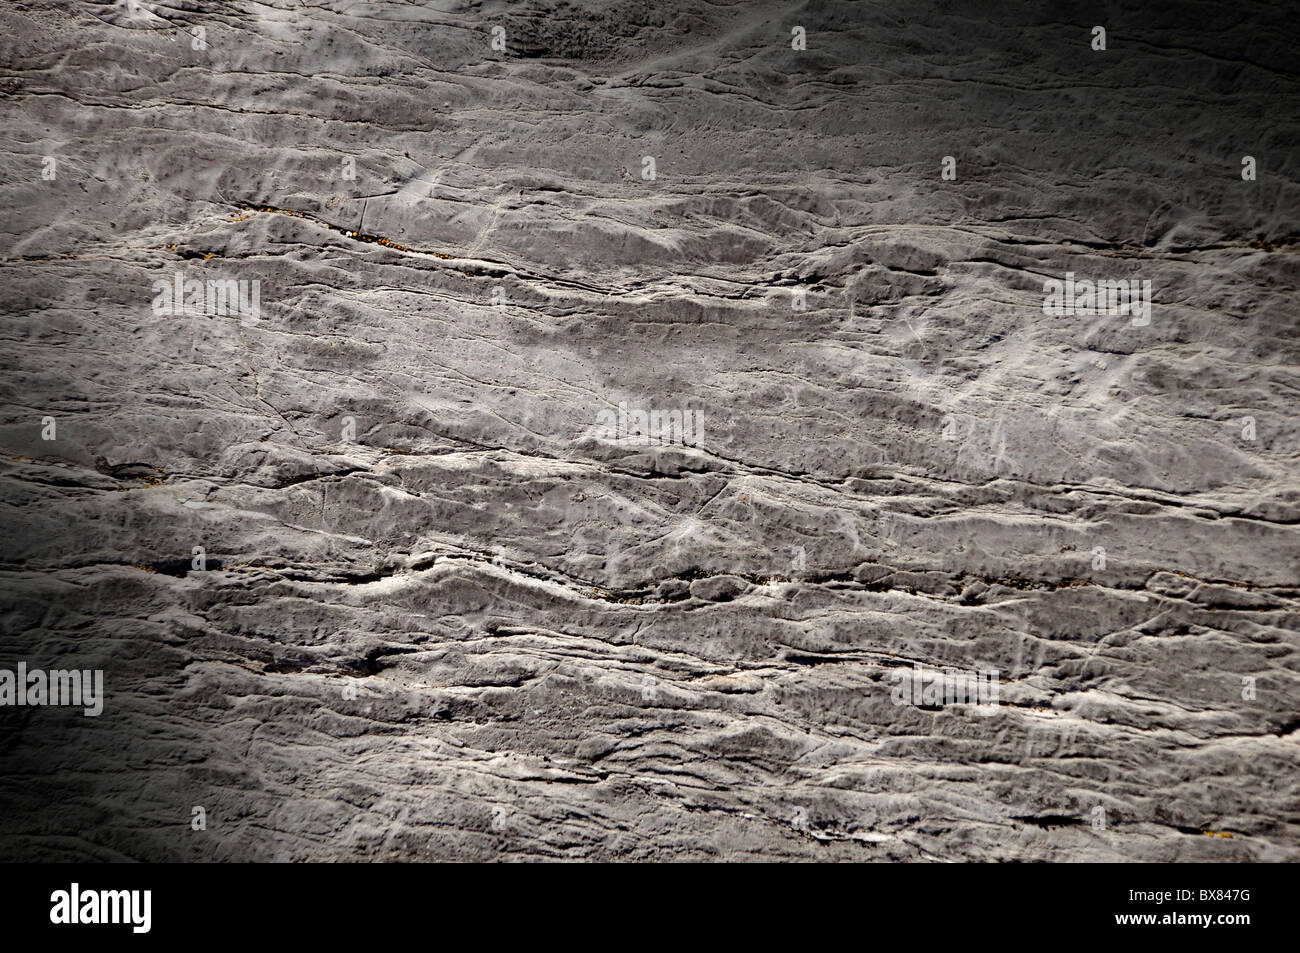 Cracked rock surface texture lit diagonally Stock Photo